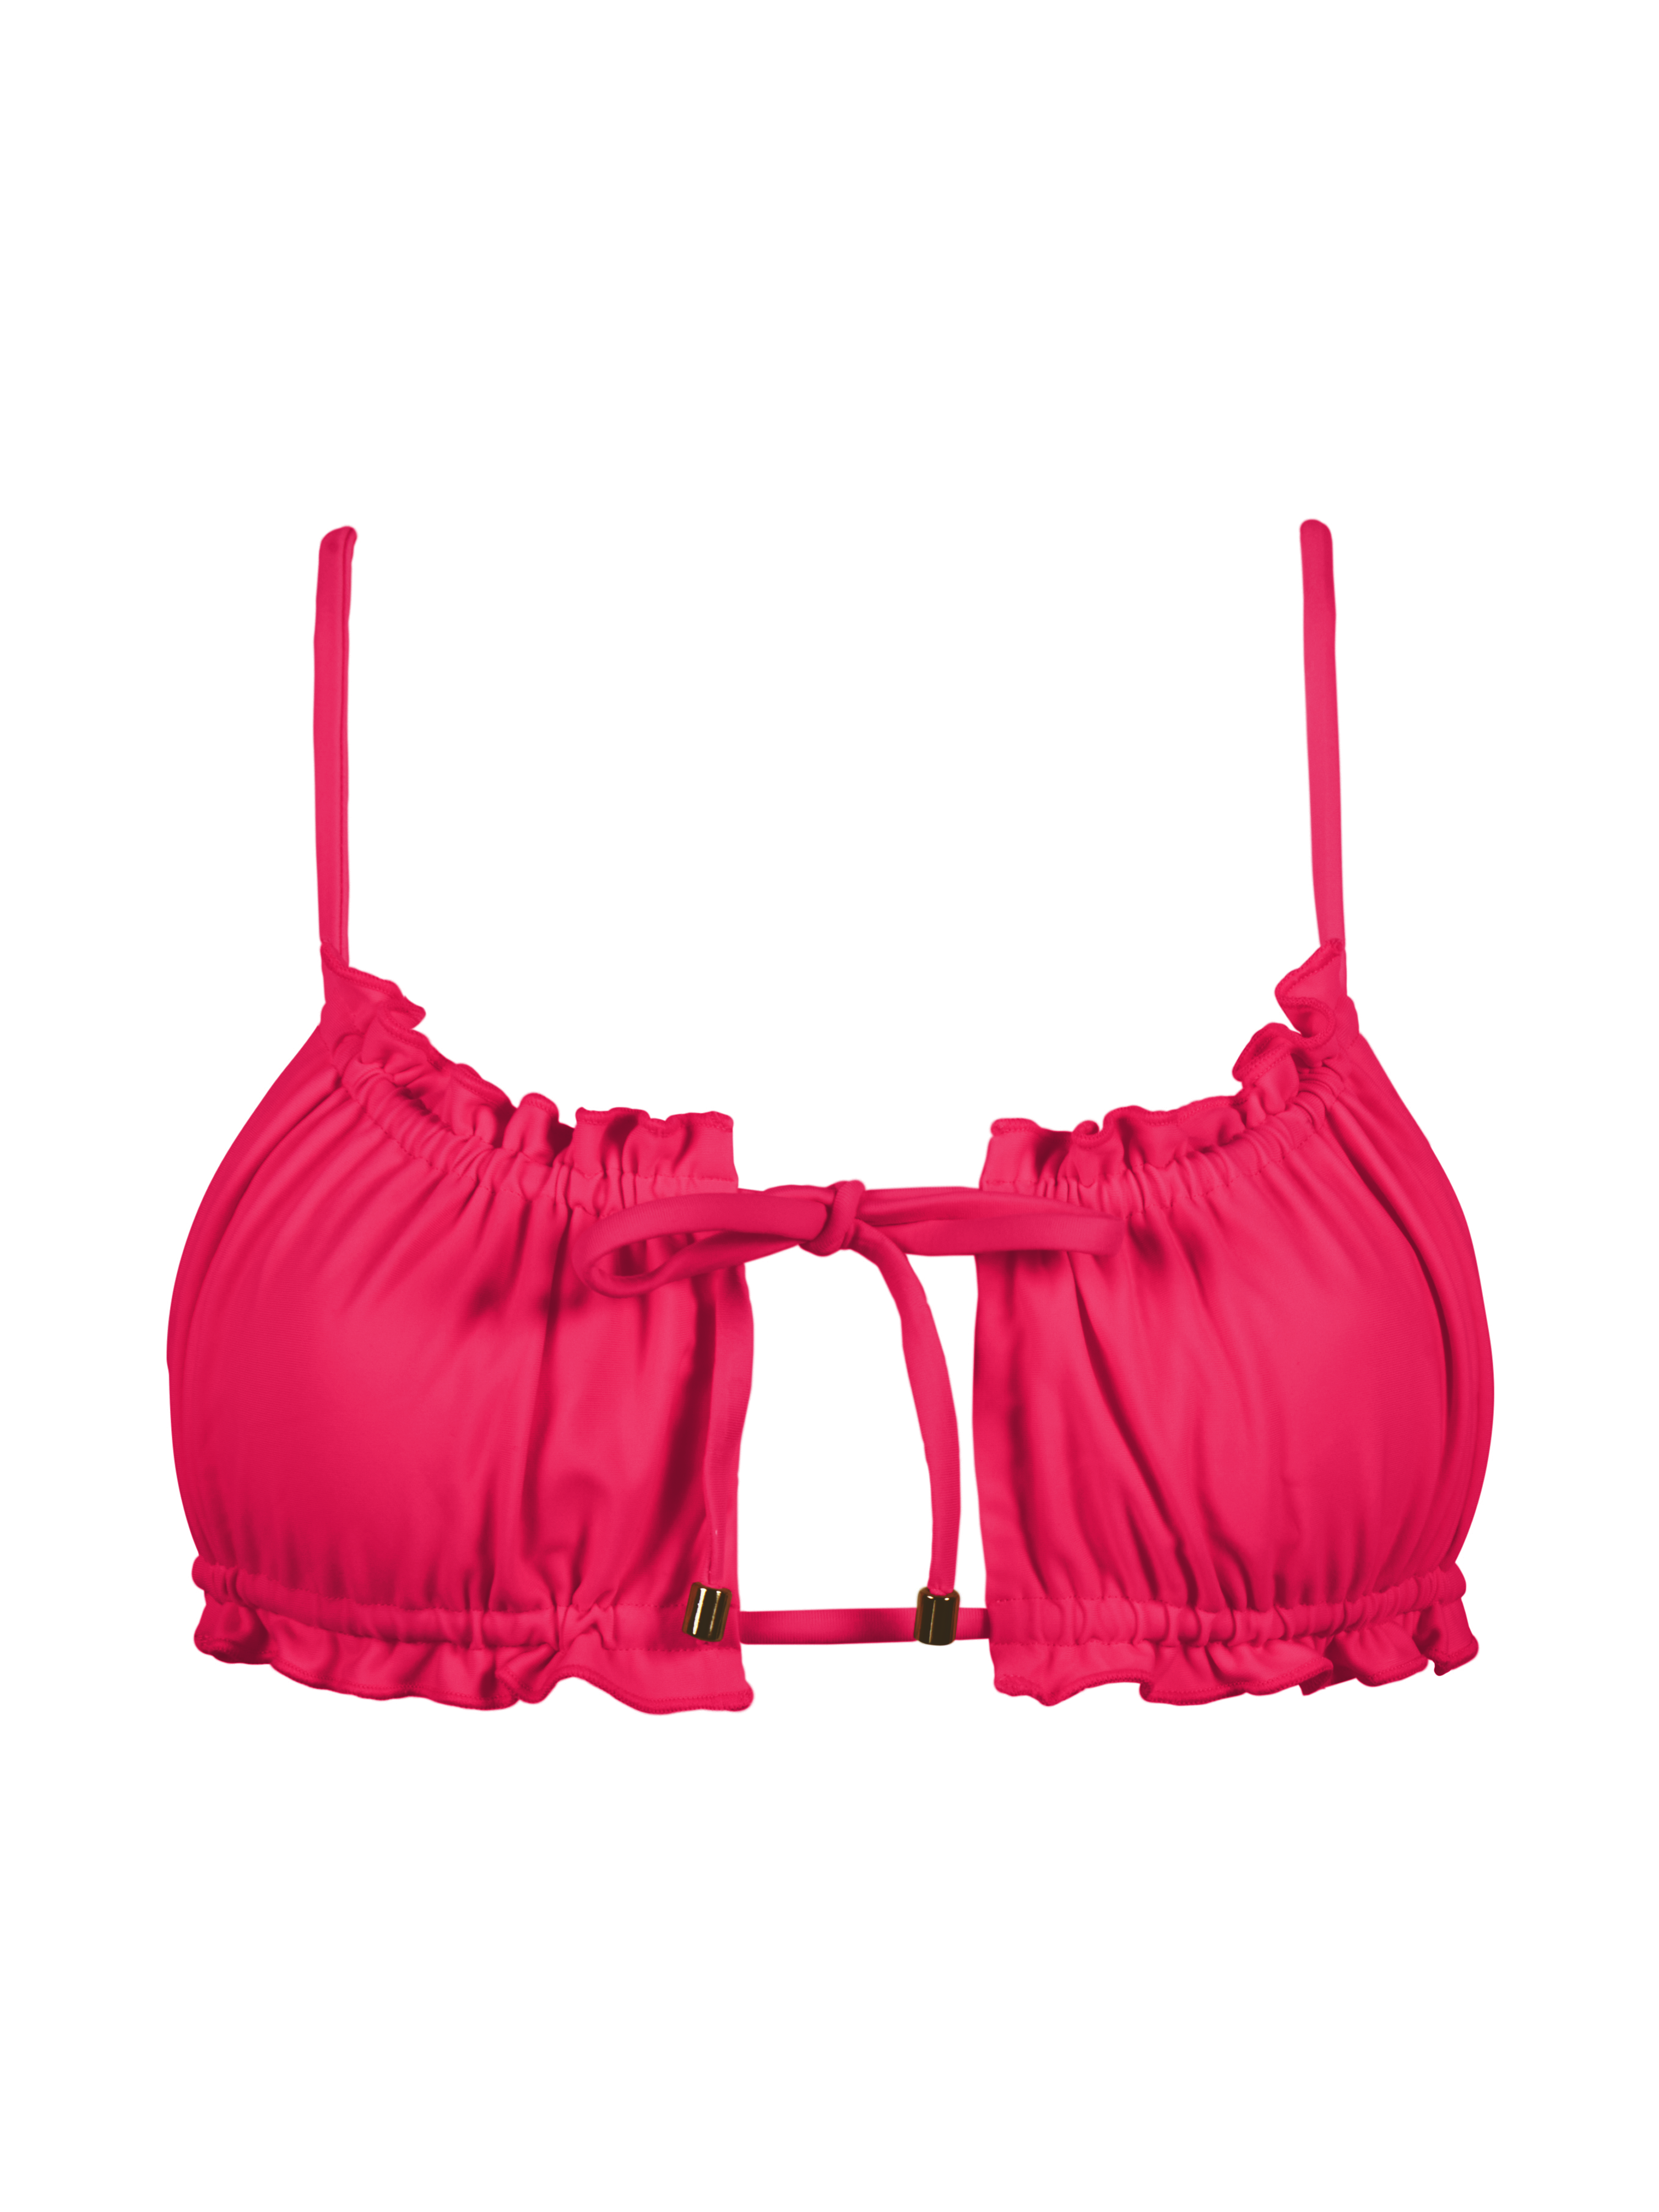 Produktbild Bikini Oberteil pink nachhaltig verstellbar Palmar